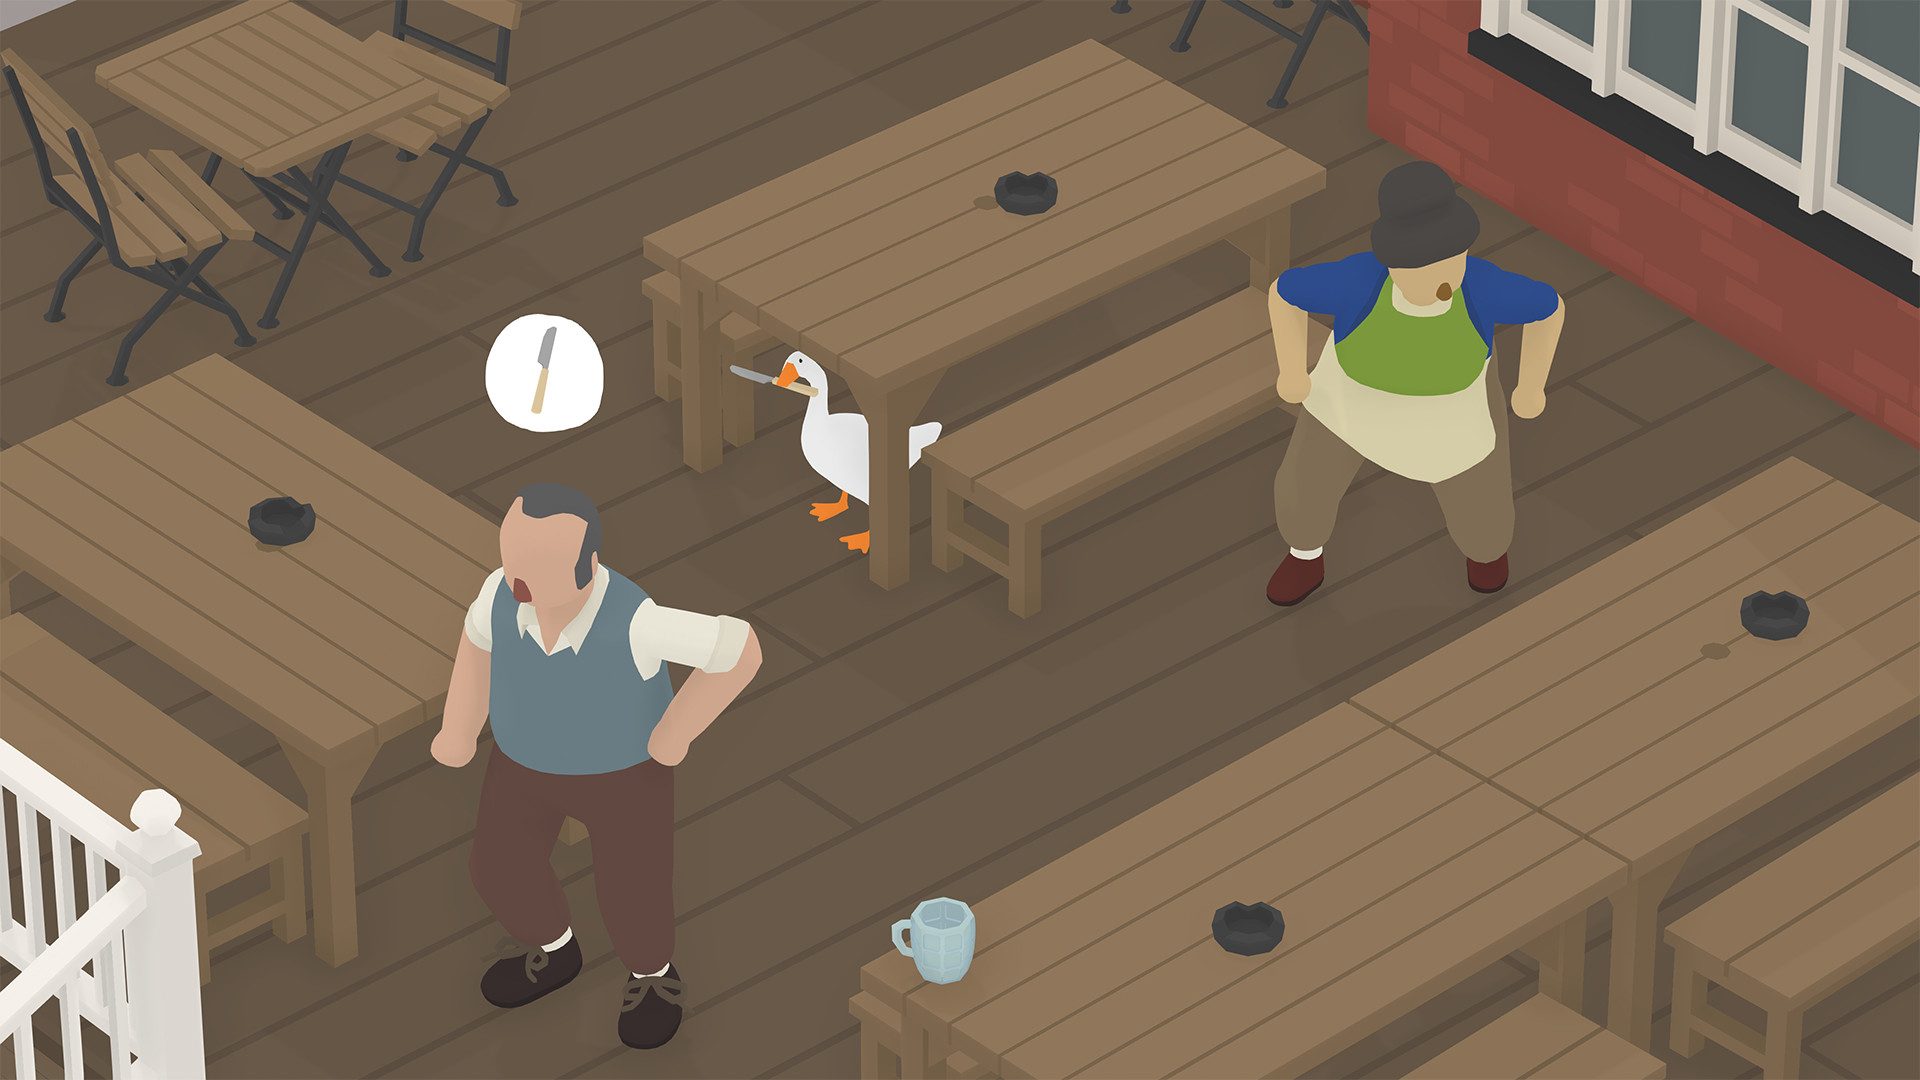 Untitled Goose Game - скриншот игры 5